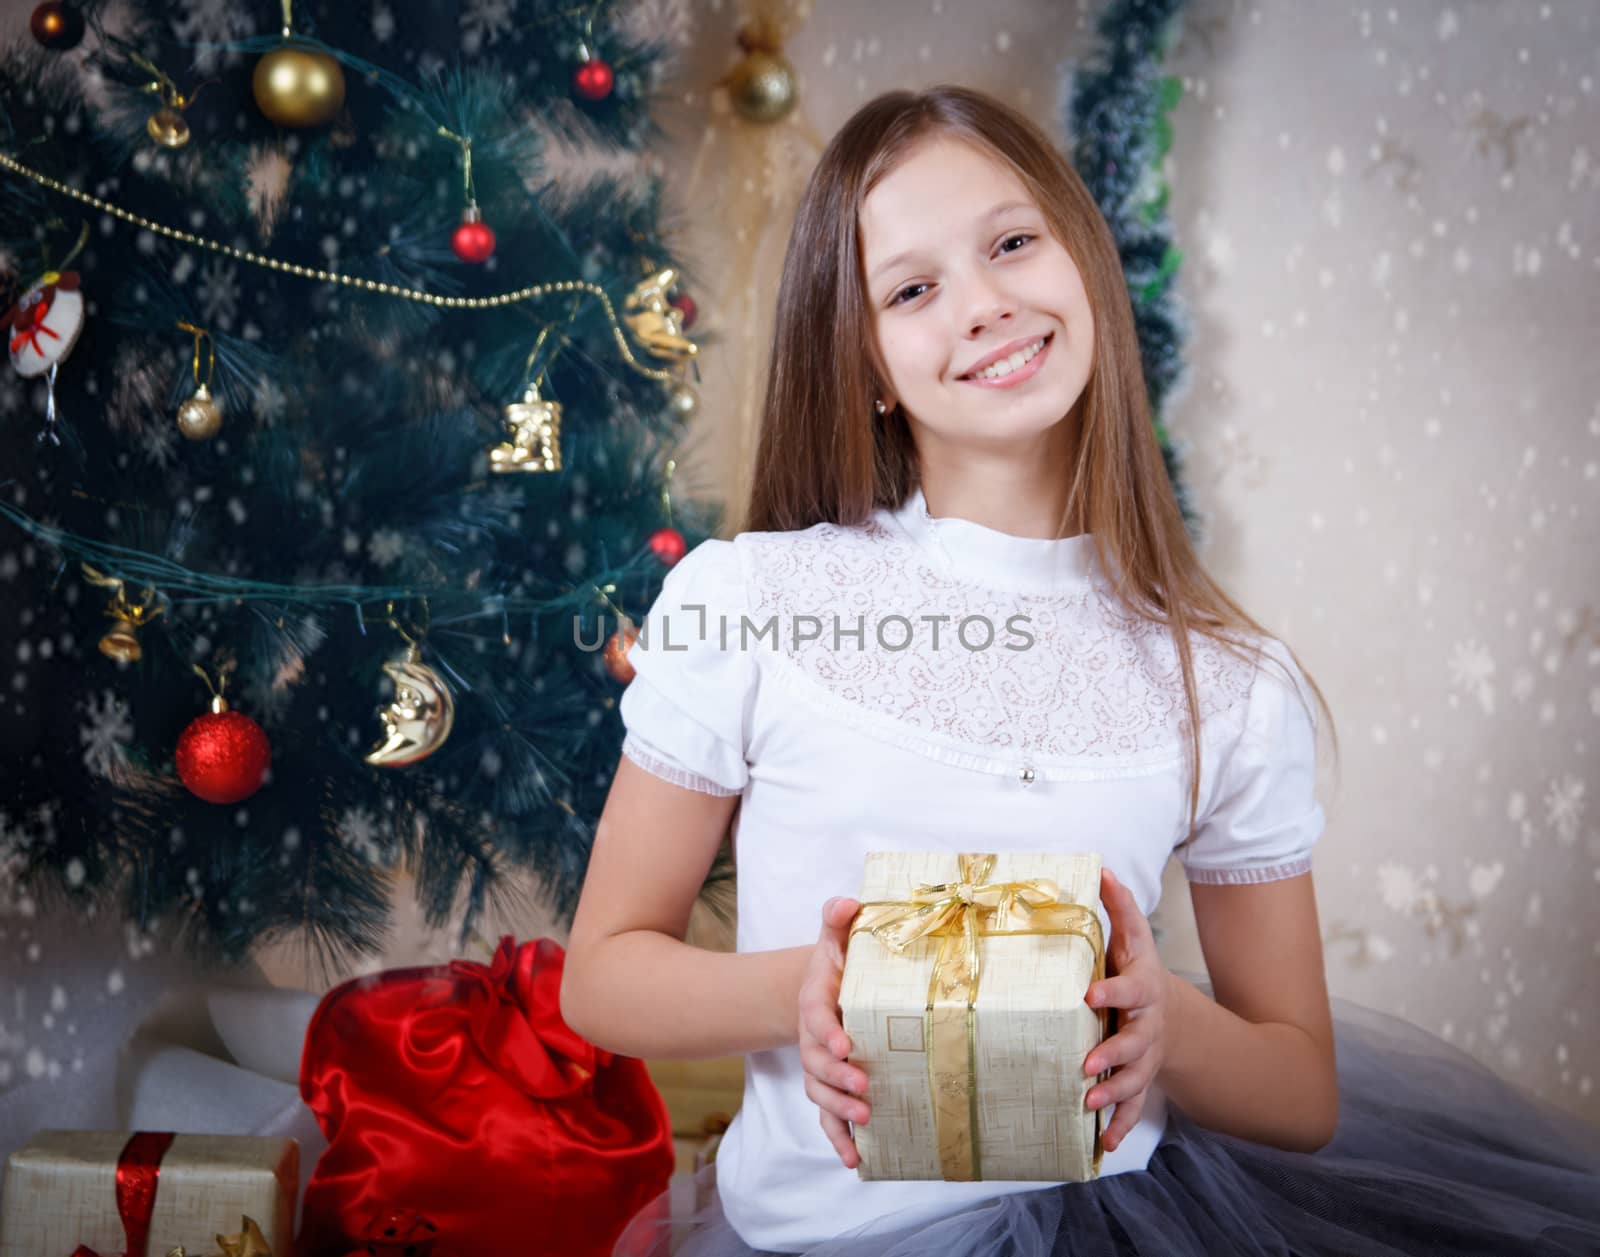 Smiling girl holding gift box under Christmas tree